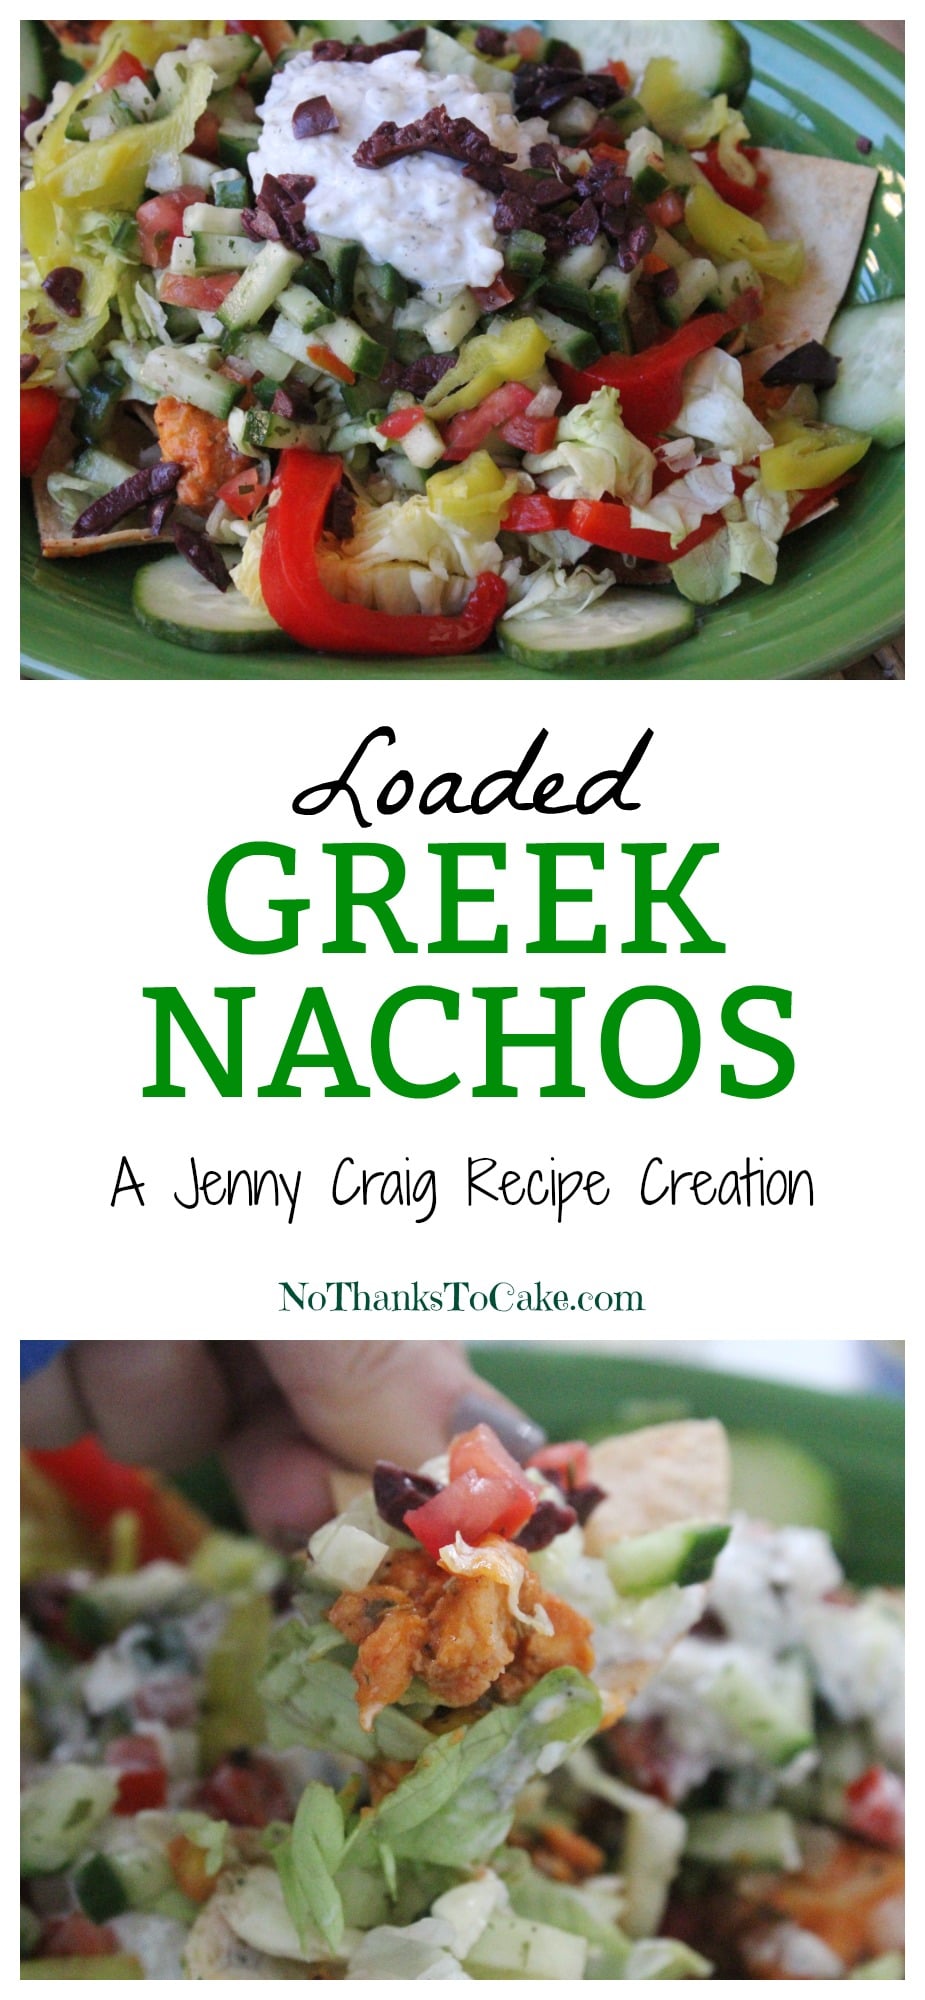 Jenny Craig Recipe Creation: Loaded Greek Nachos